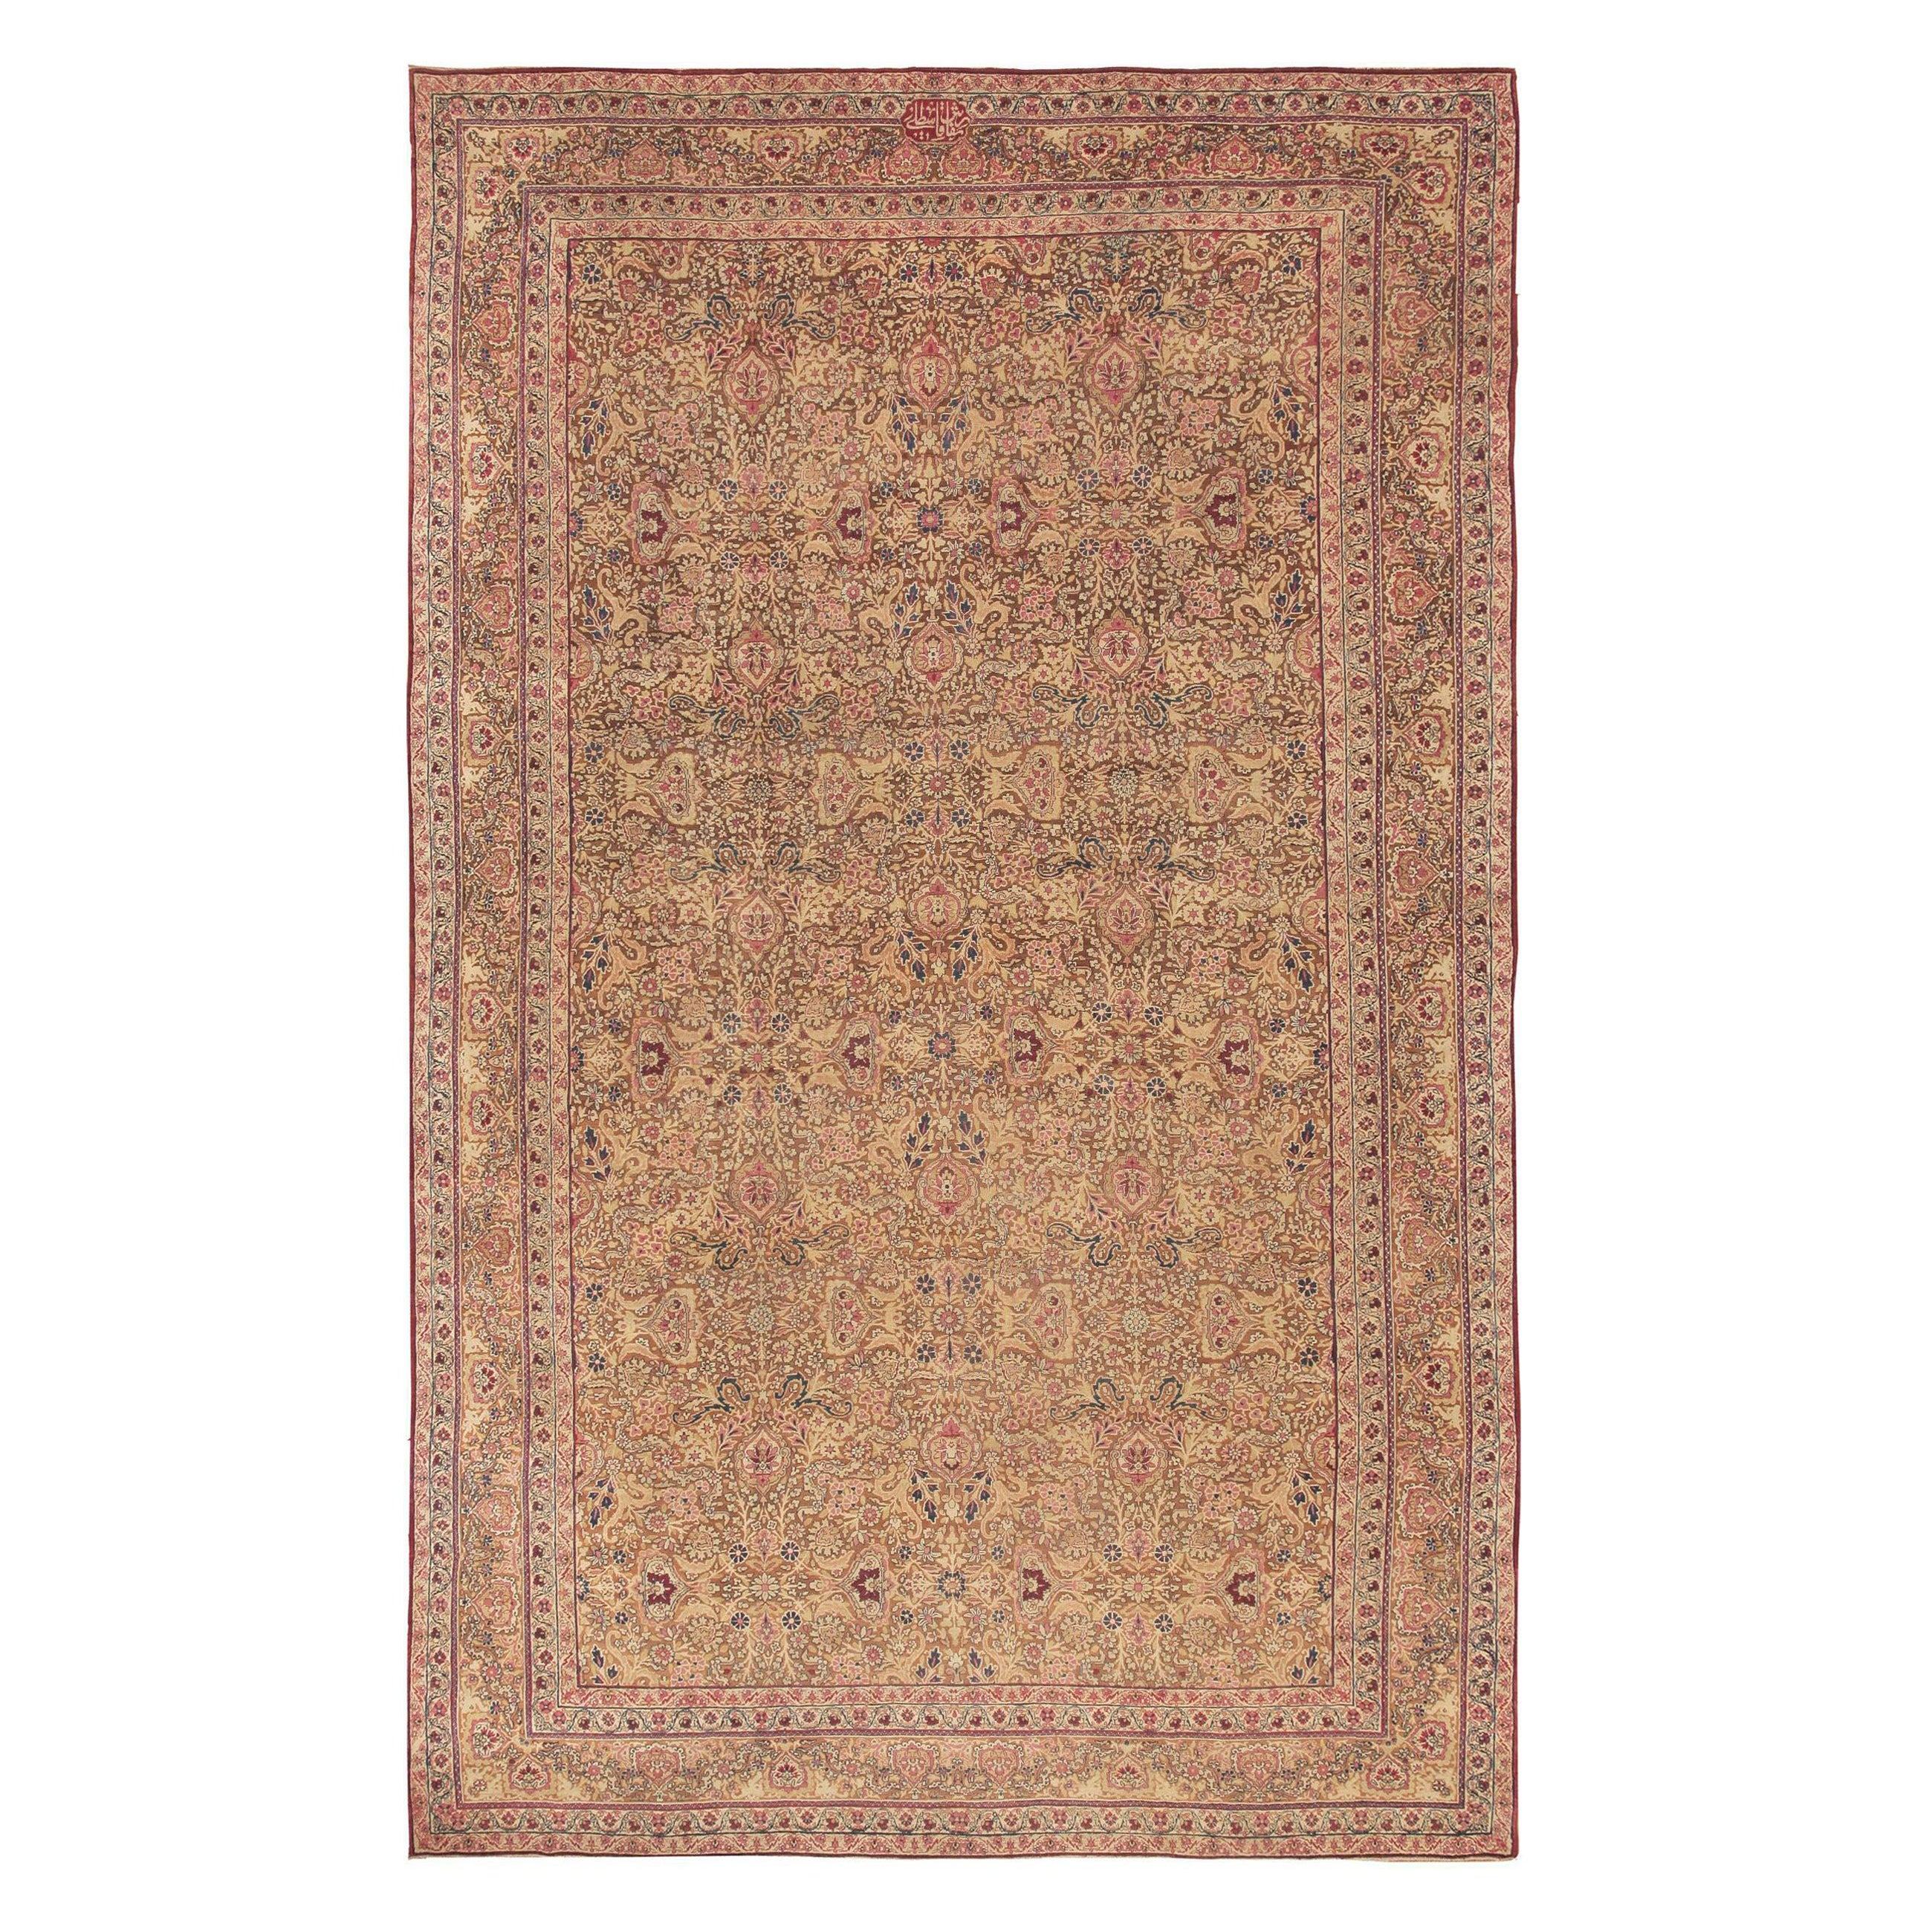 Antique Persian Kerman Carpet. Size: 11' 6" x 17' 9"